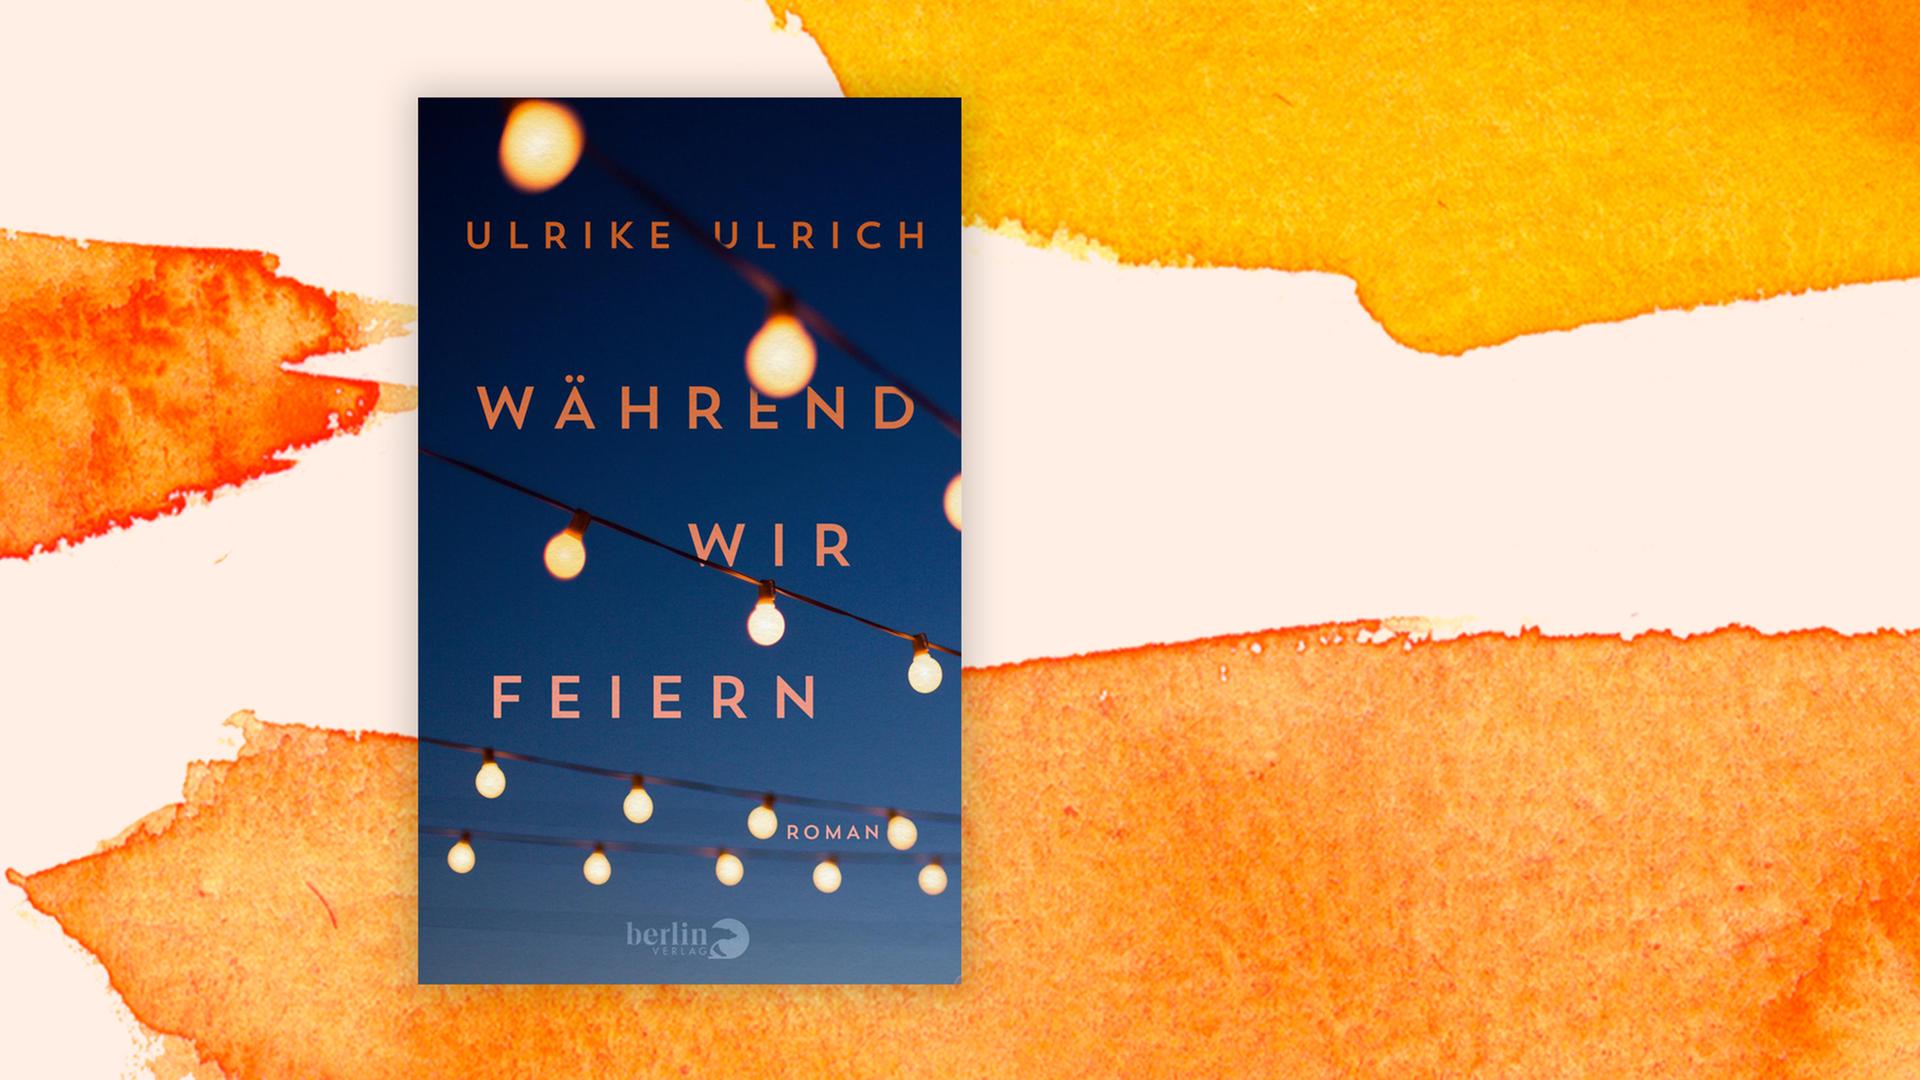 Ulrike Ulrich: "Während wir feiern"